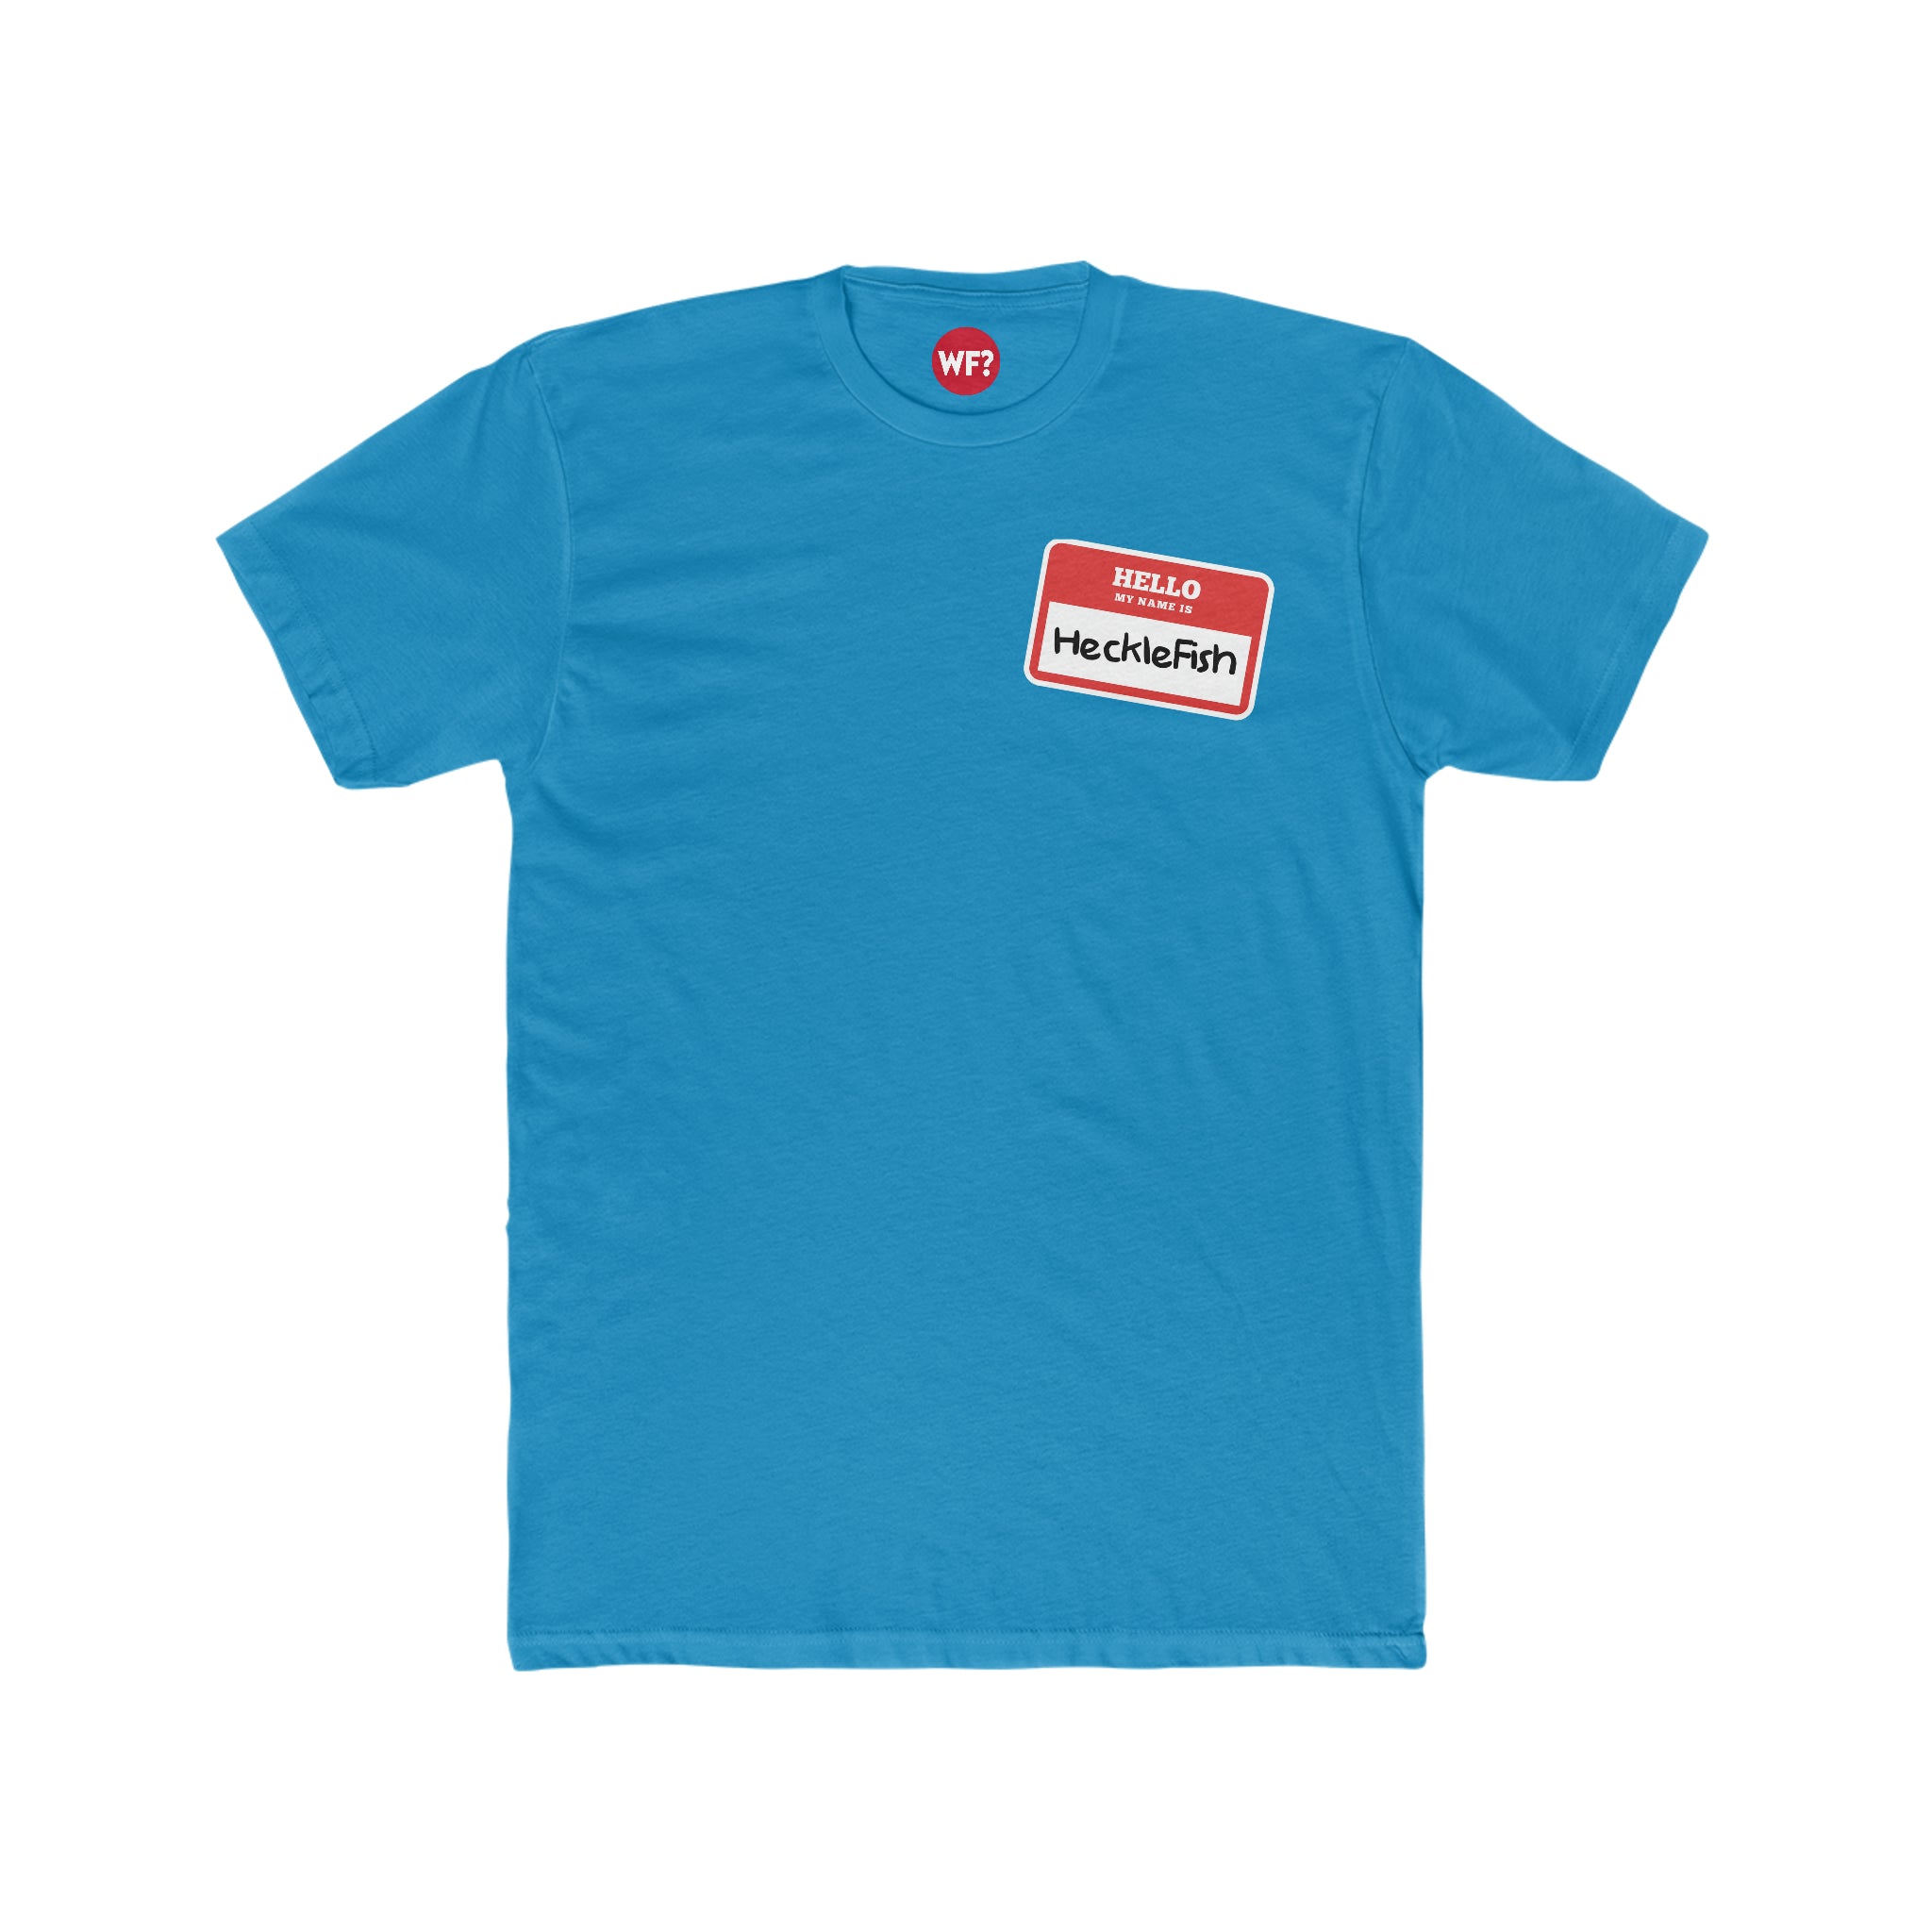 Buy solid-turquoise Hecklefish Nametag Unisex T-Shirt